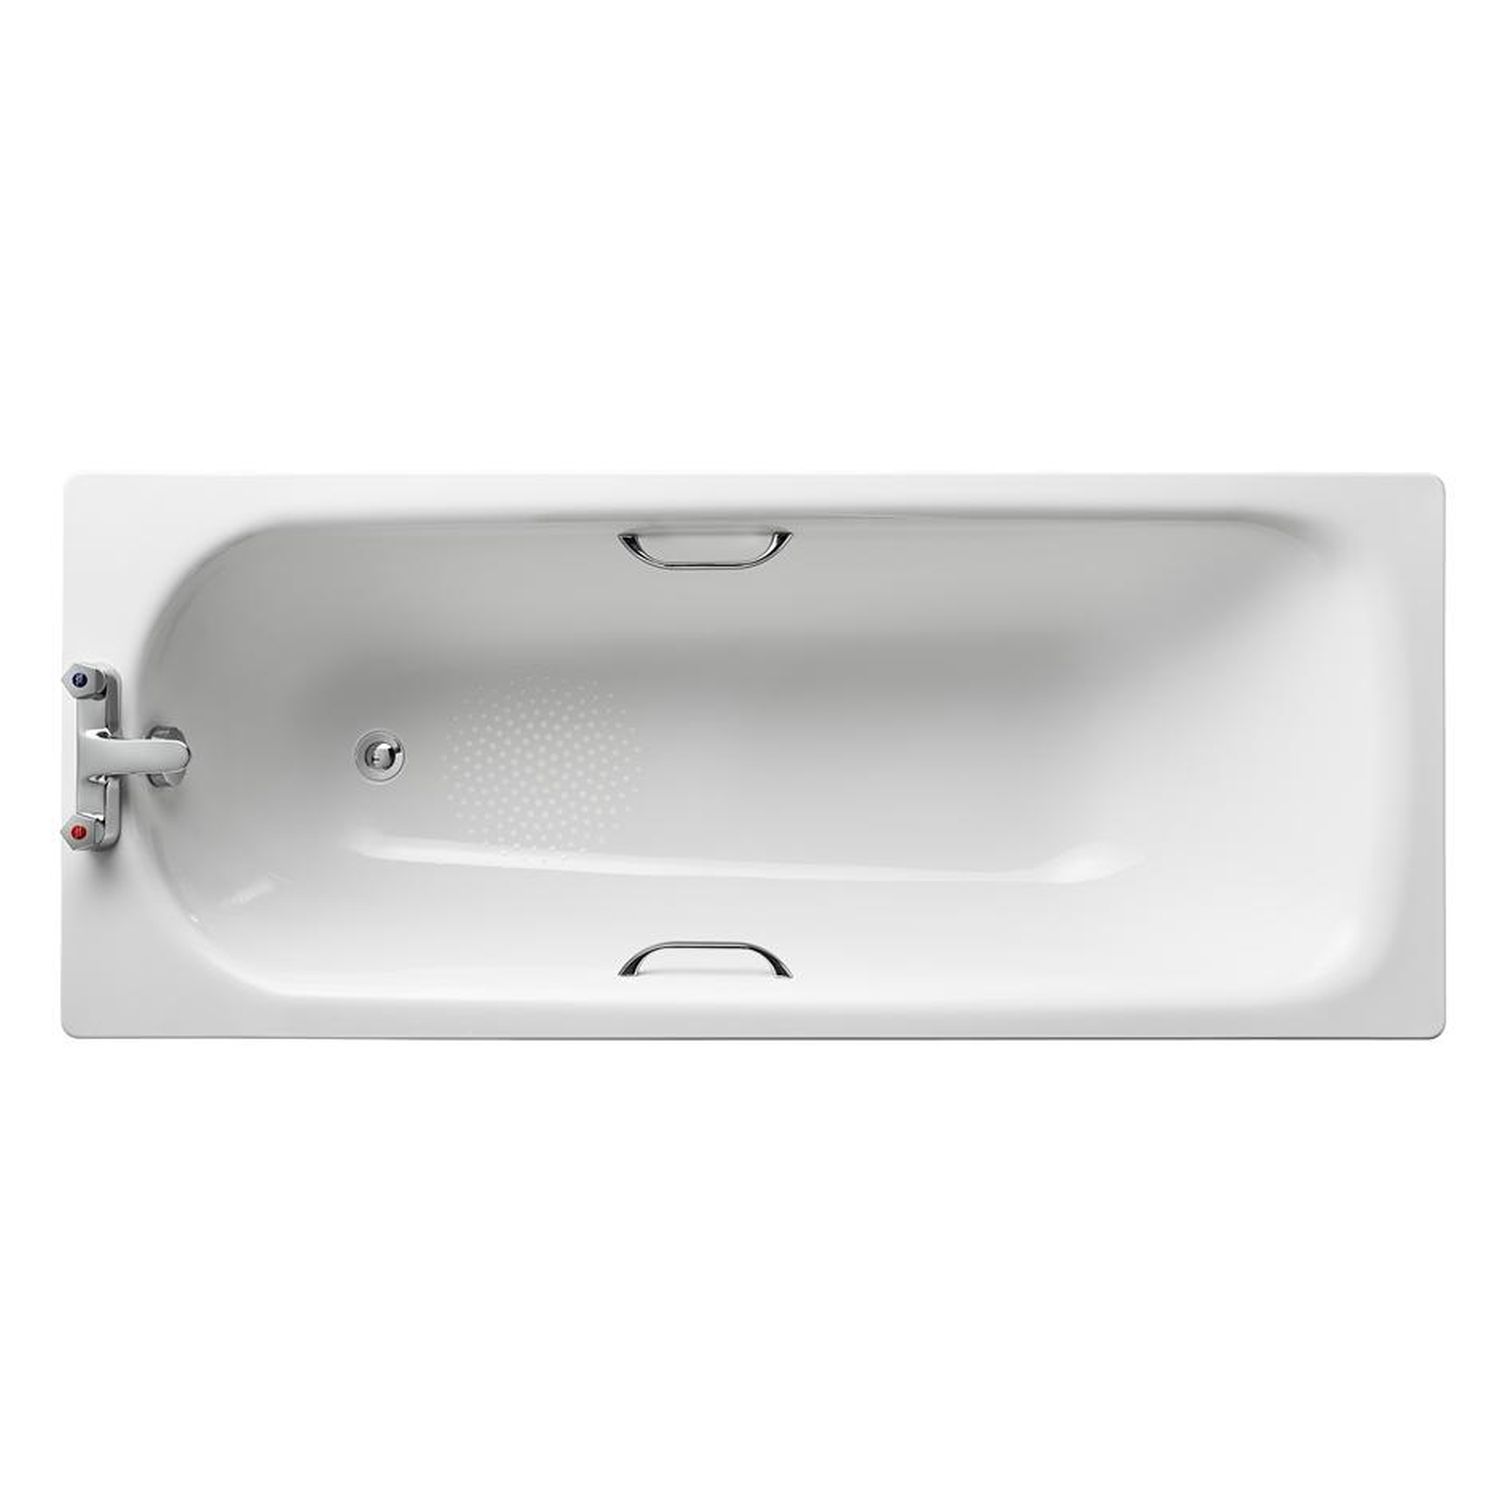 Armitage Shanks | Sandringham 21 | S183501 | 1700x700 2 Tap Hole Twin Grip Anti-Slip Bath